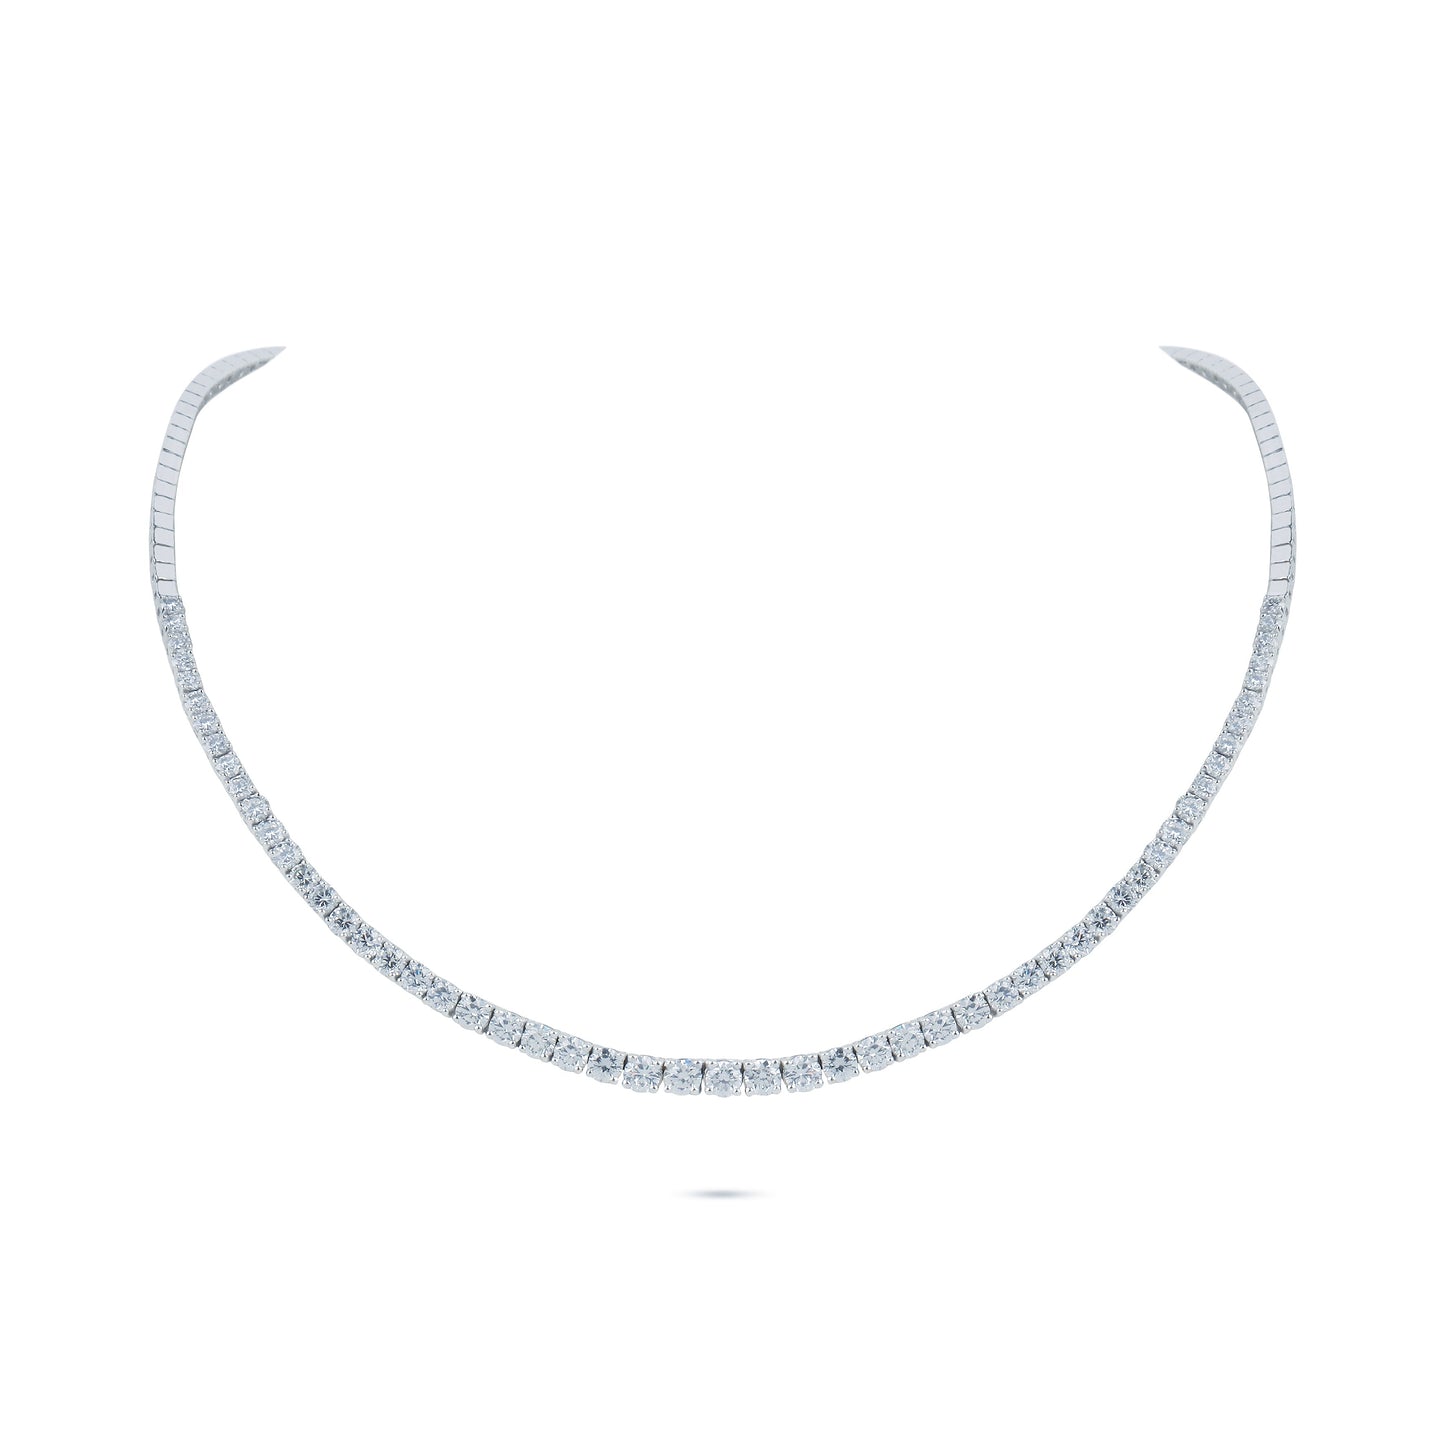 5.78 Carats Diamond Tennis Necklace